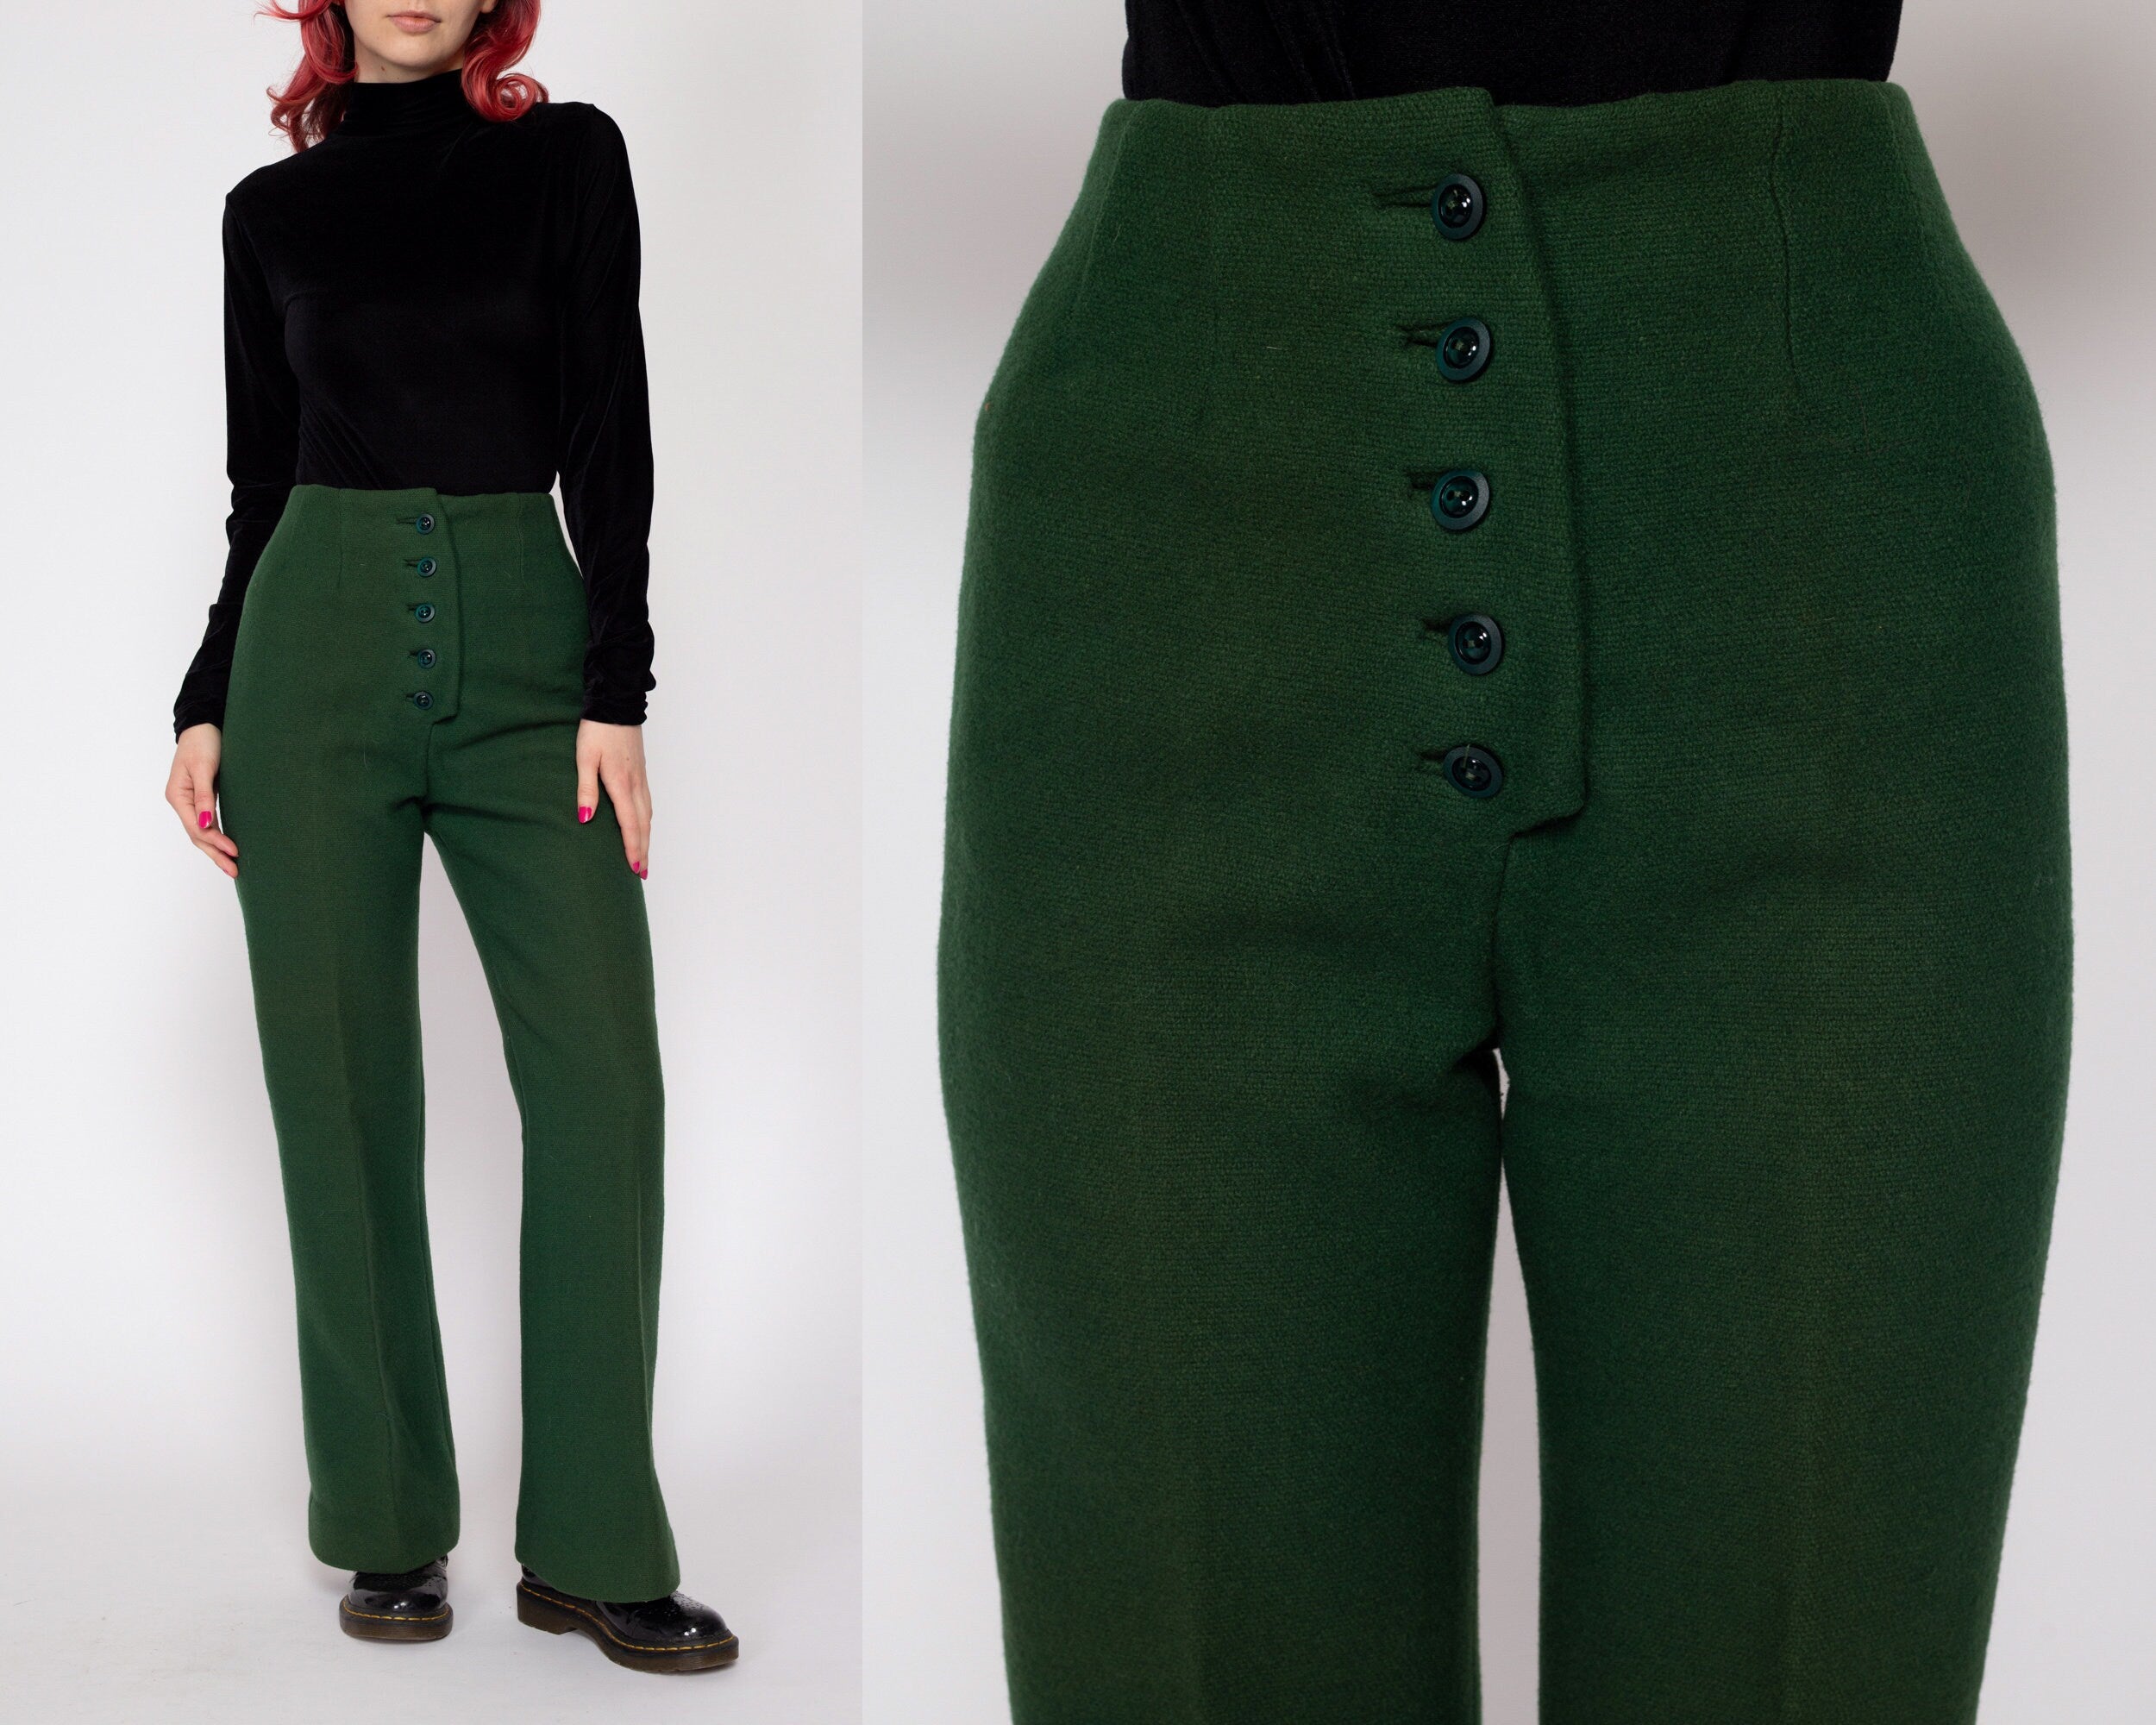 Escada Margaretha Ley Dark Forest Green Velvet Pants Trousers size 44 DE/14  US | eBay